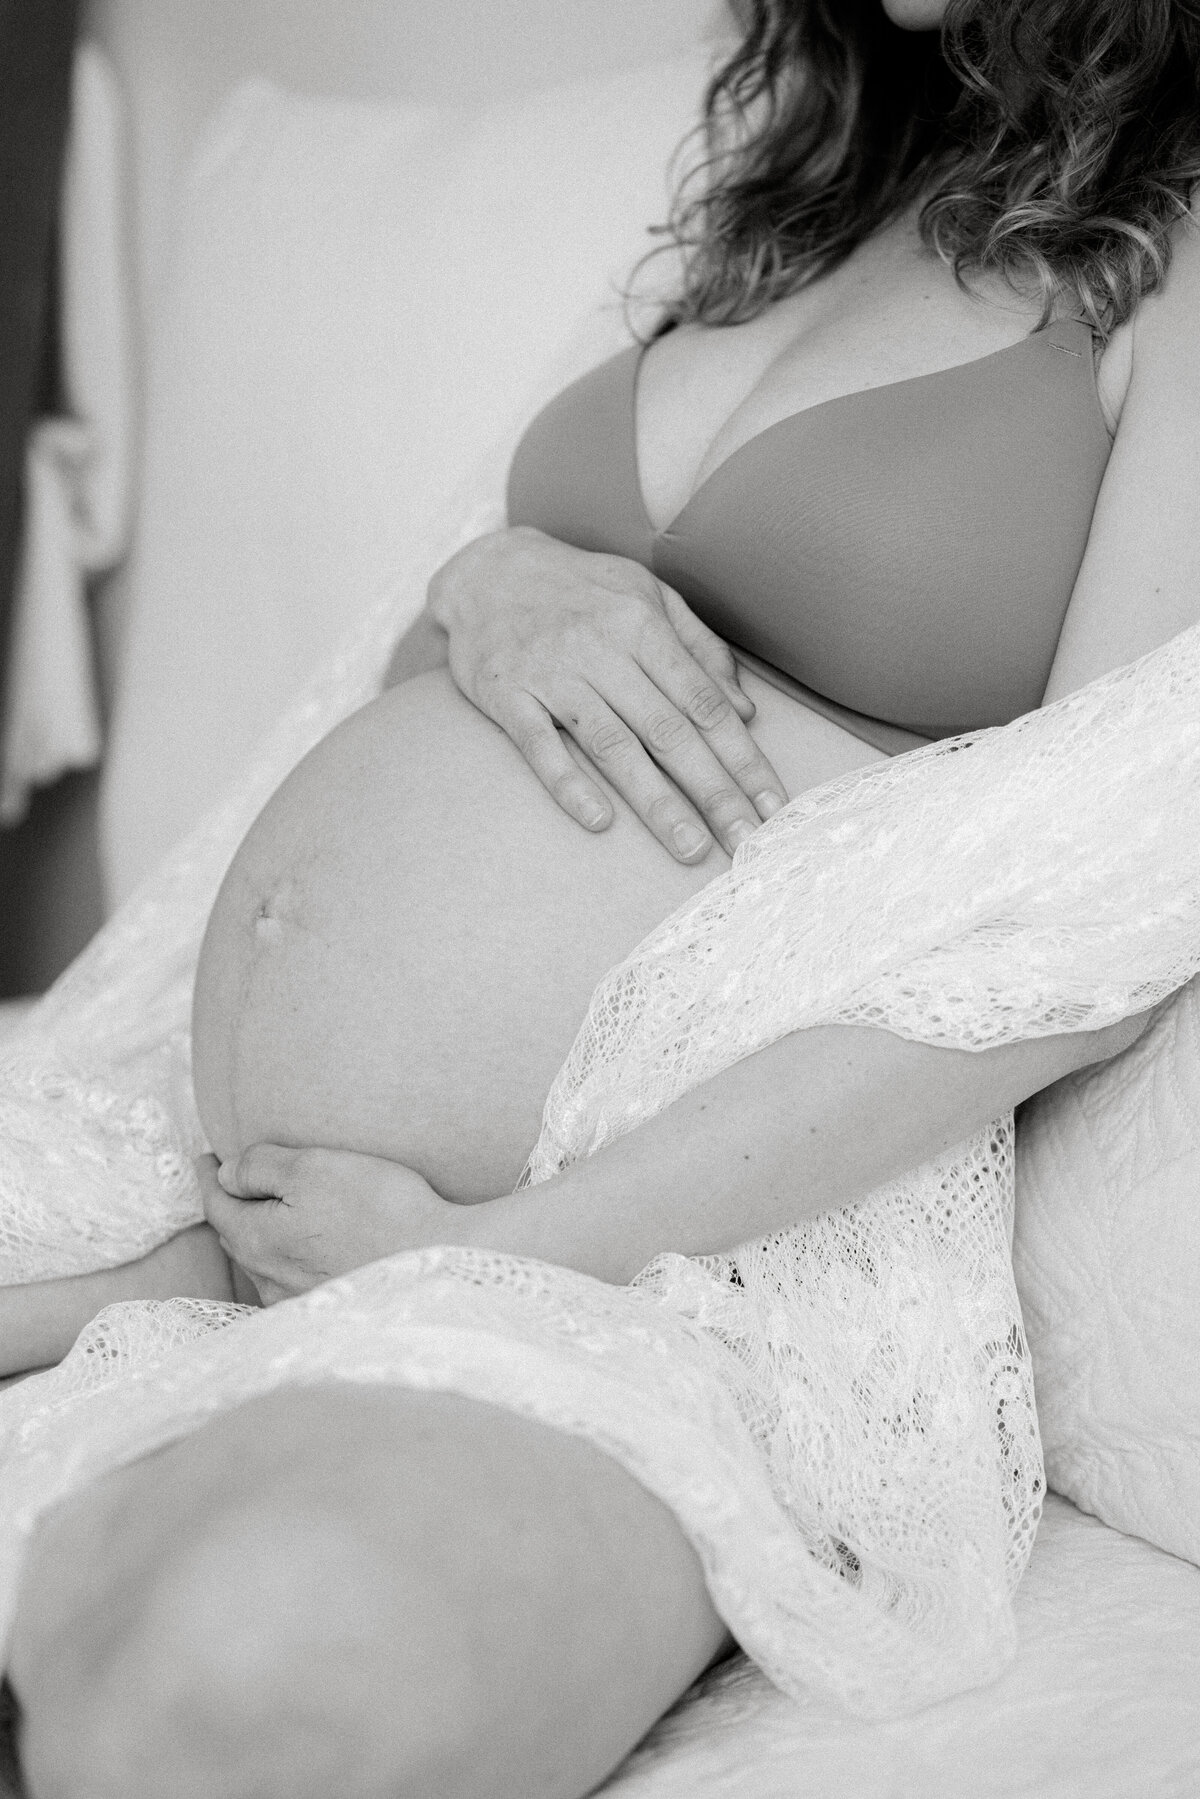 asheville-maternity-photographer